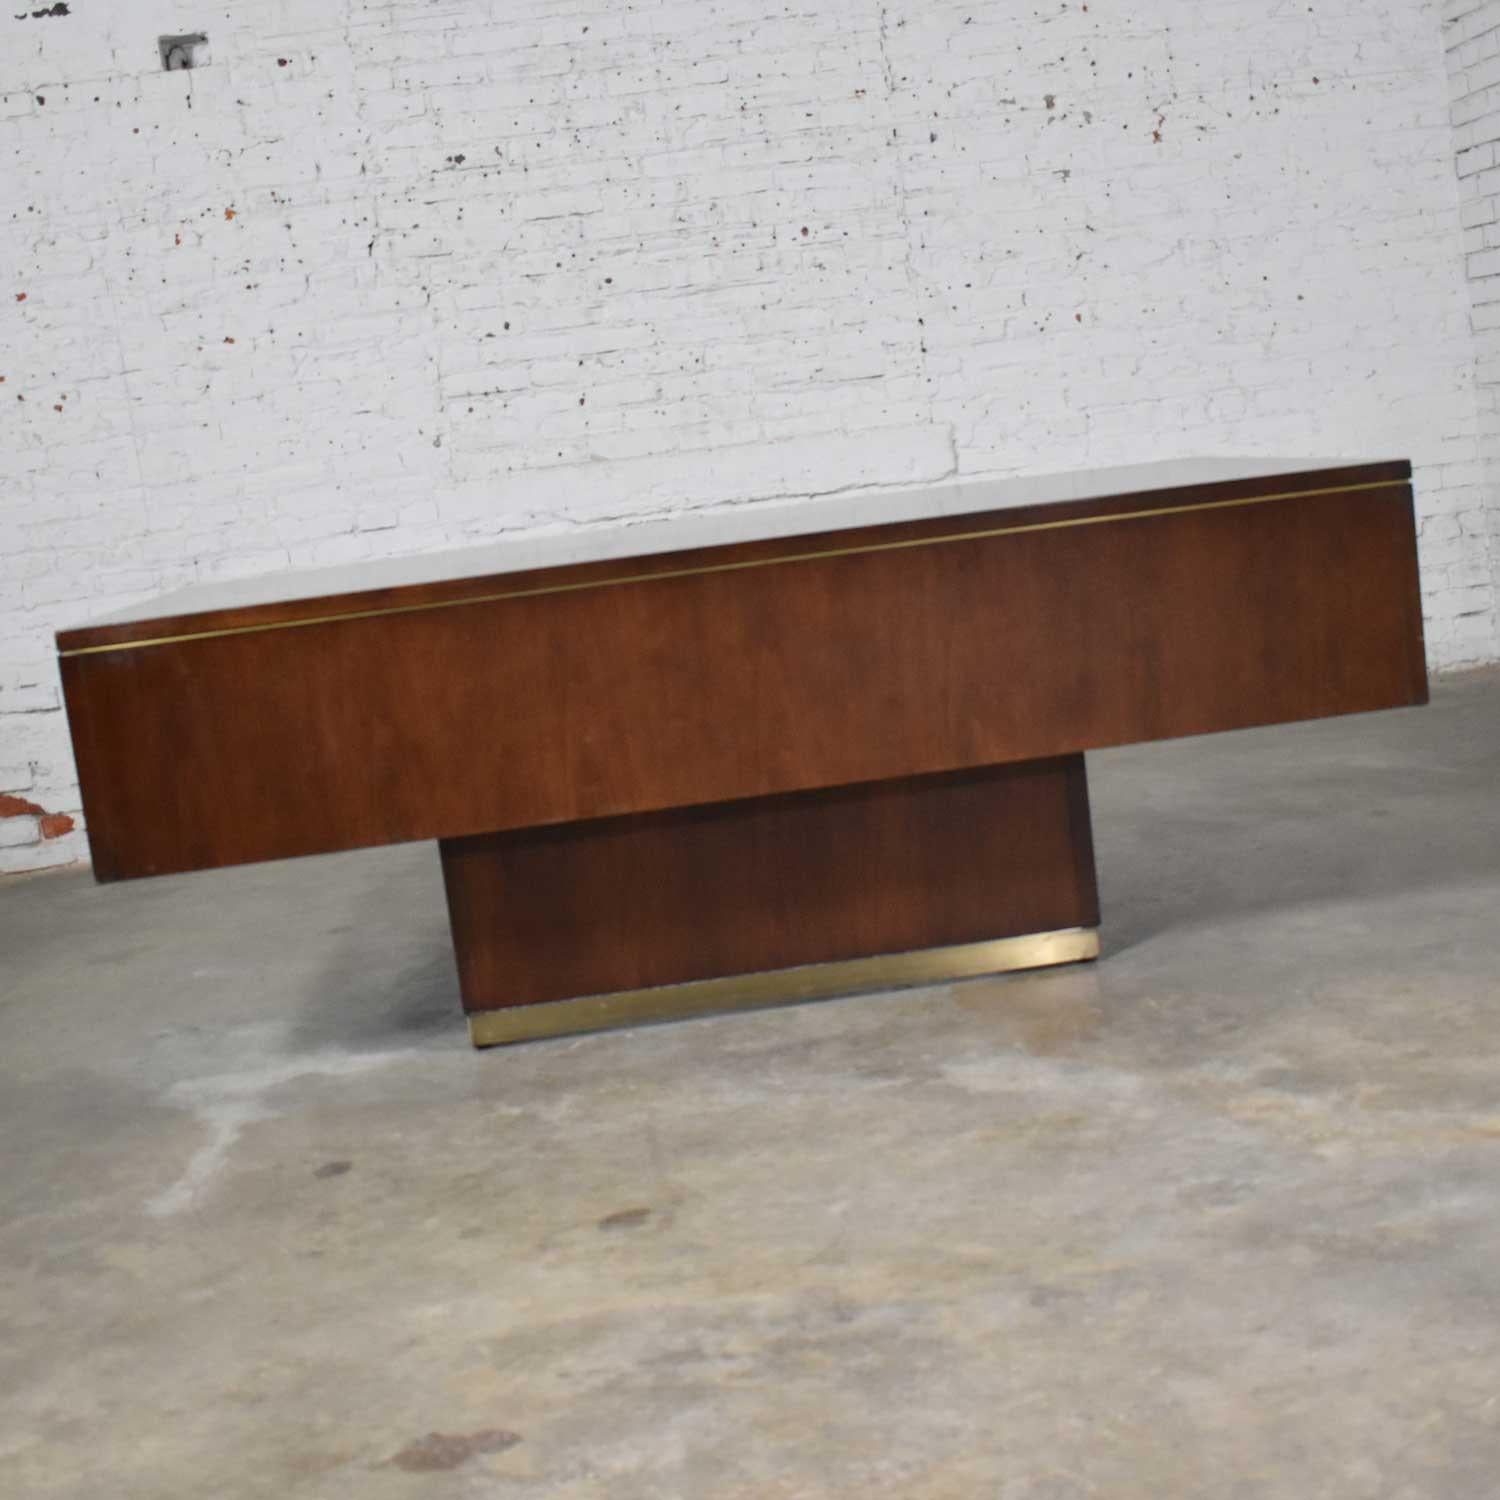 Large Mid-Century Modern Cantilever Executive Desk & Credenza by Myrtle Desk Co. 9